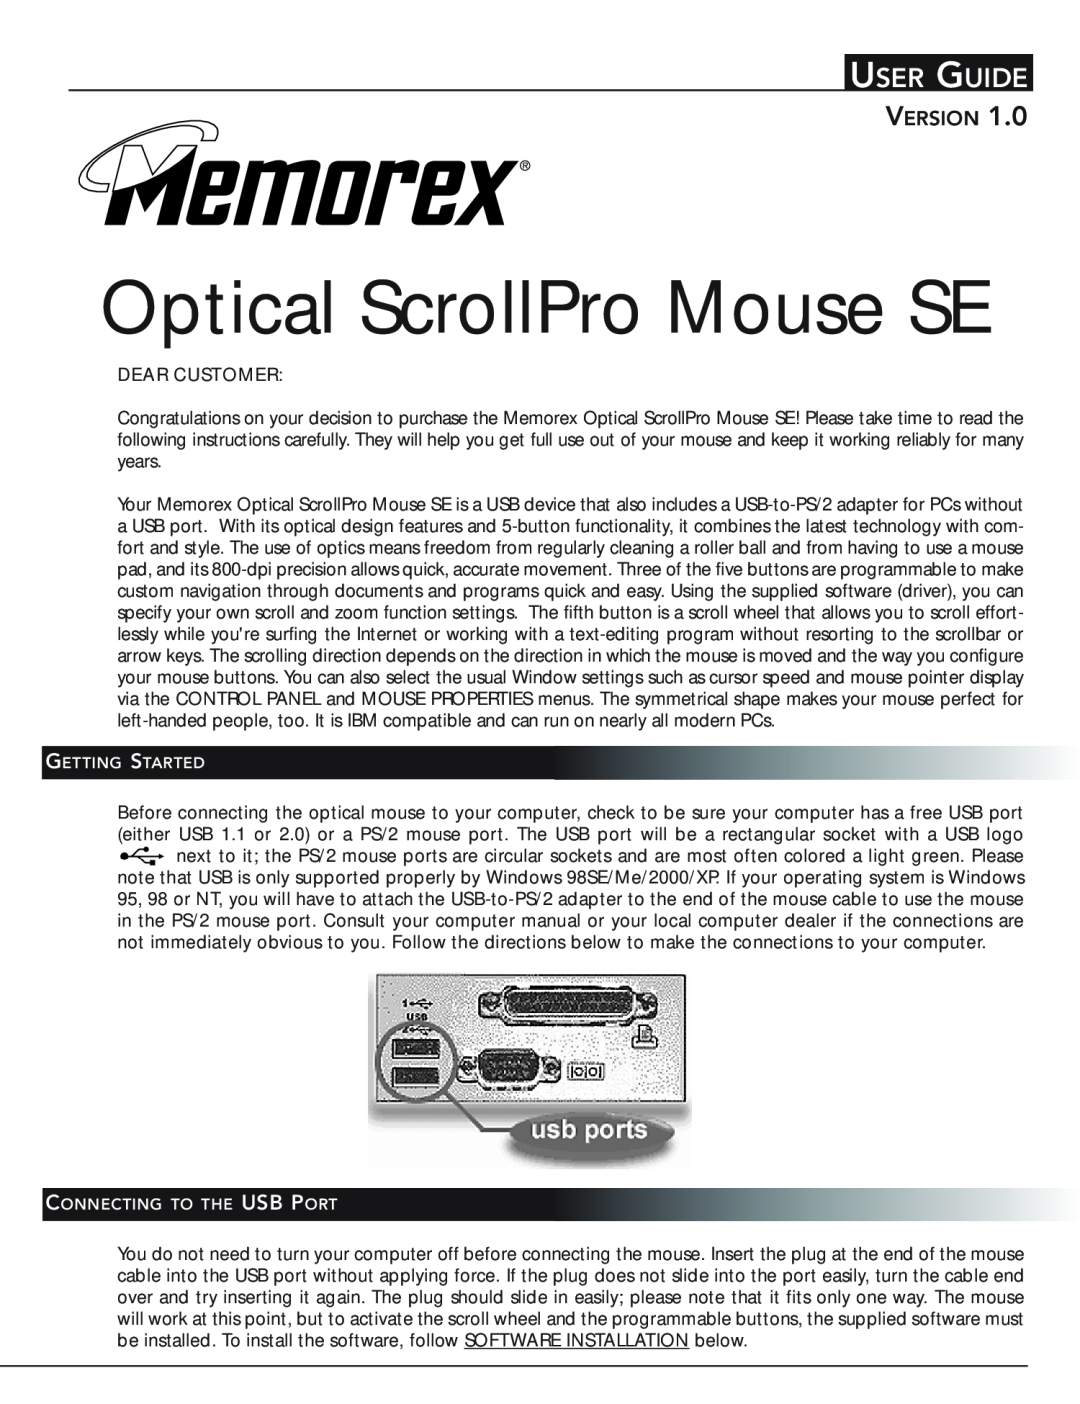 Memorex manual Optical ScrollPro Mouse SE, User Guide, Version 